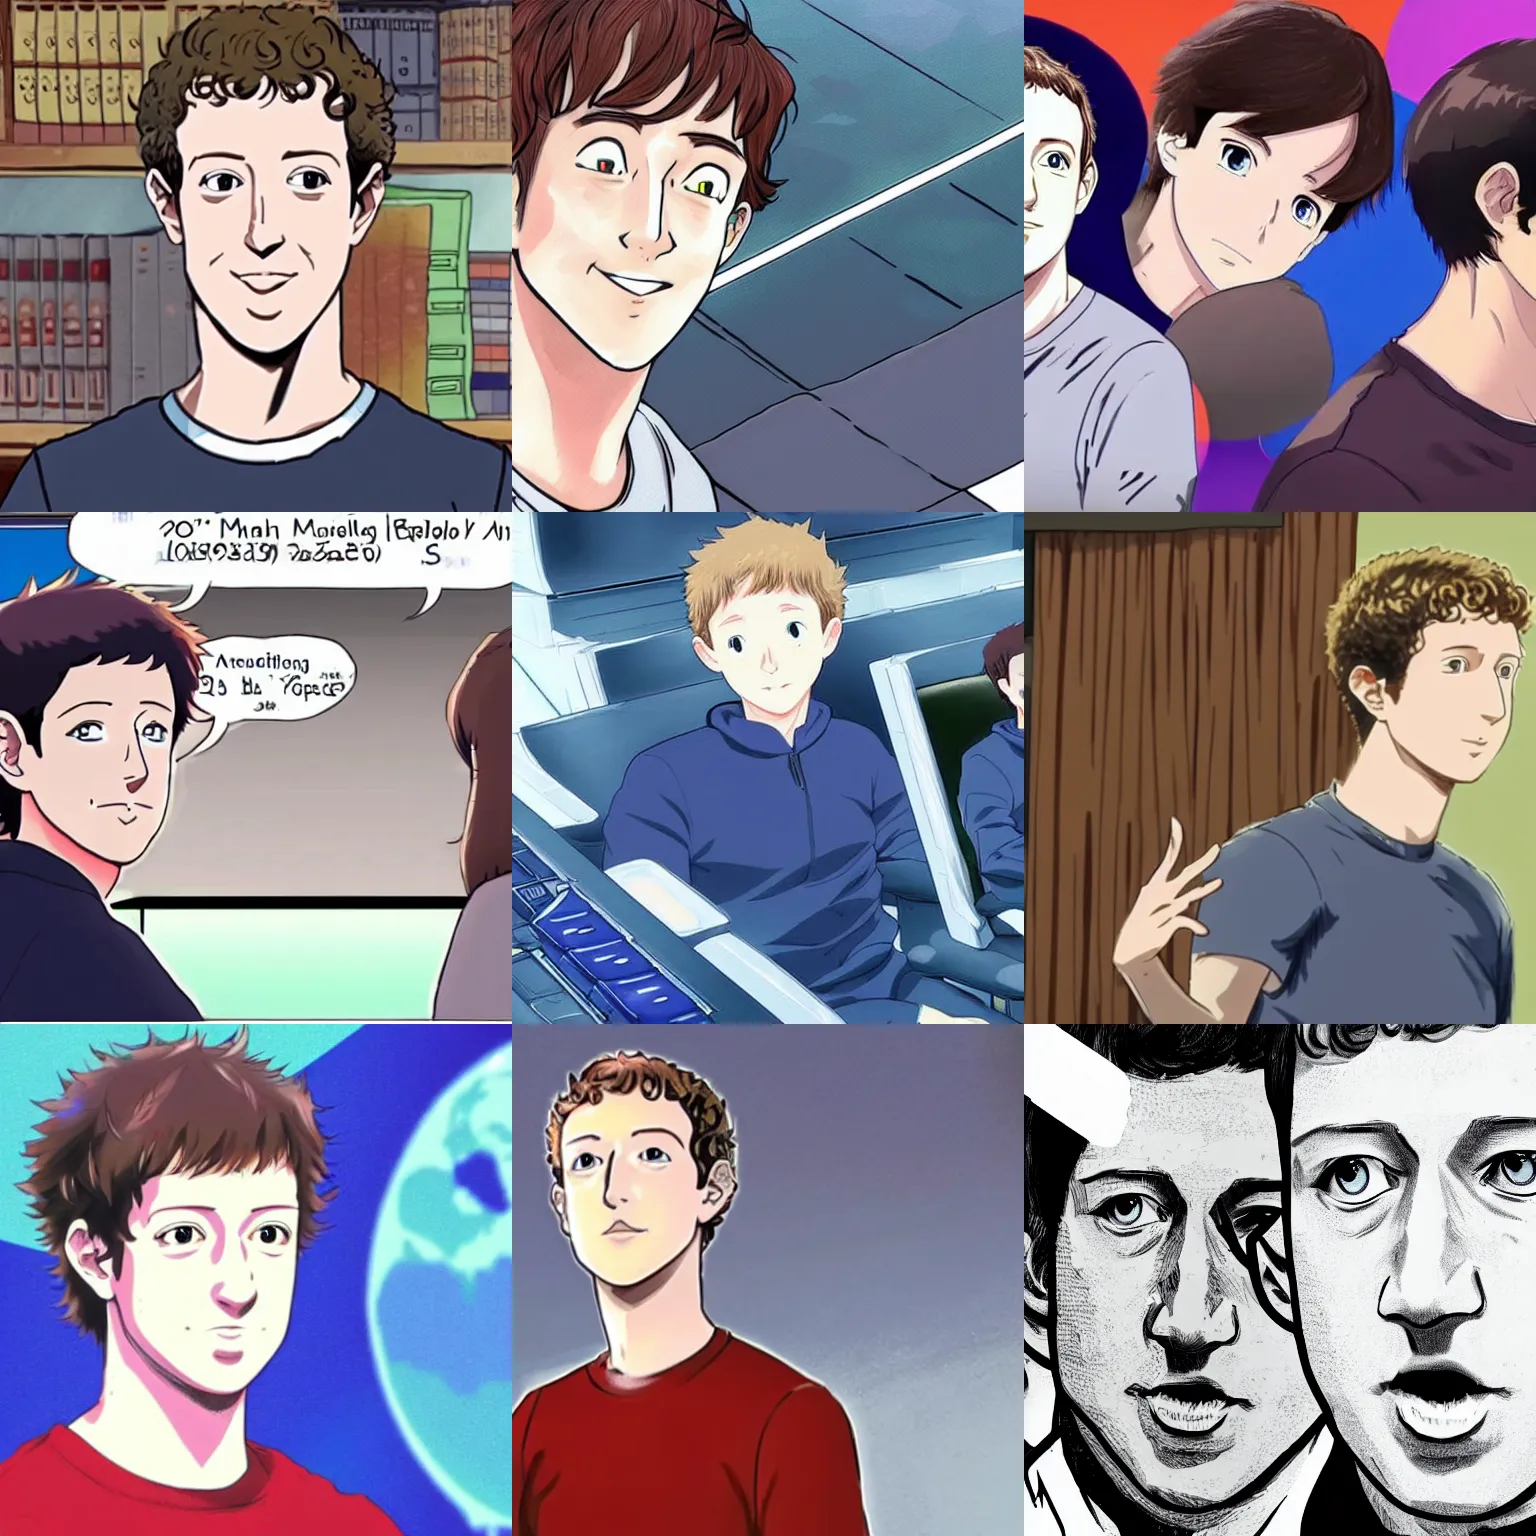 Prompt: mark Zuckerberg in an anime